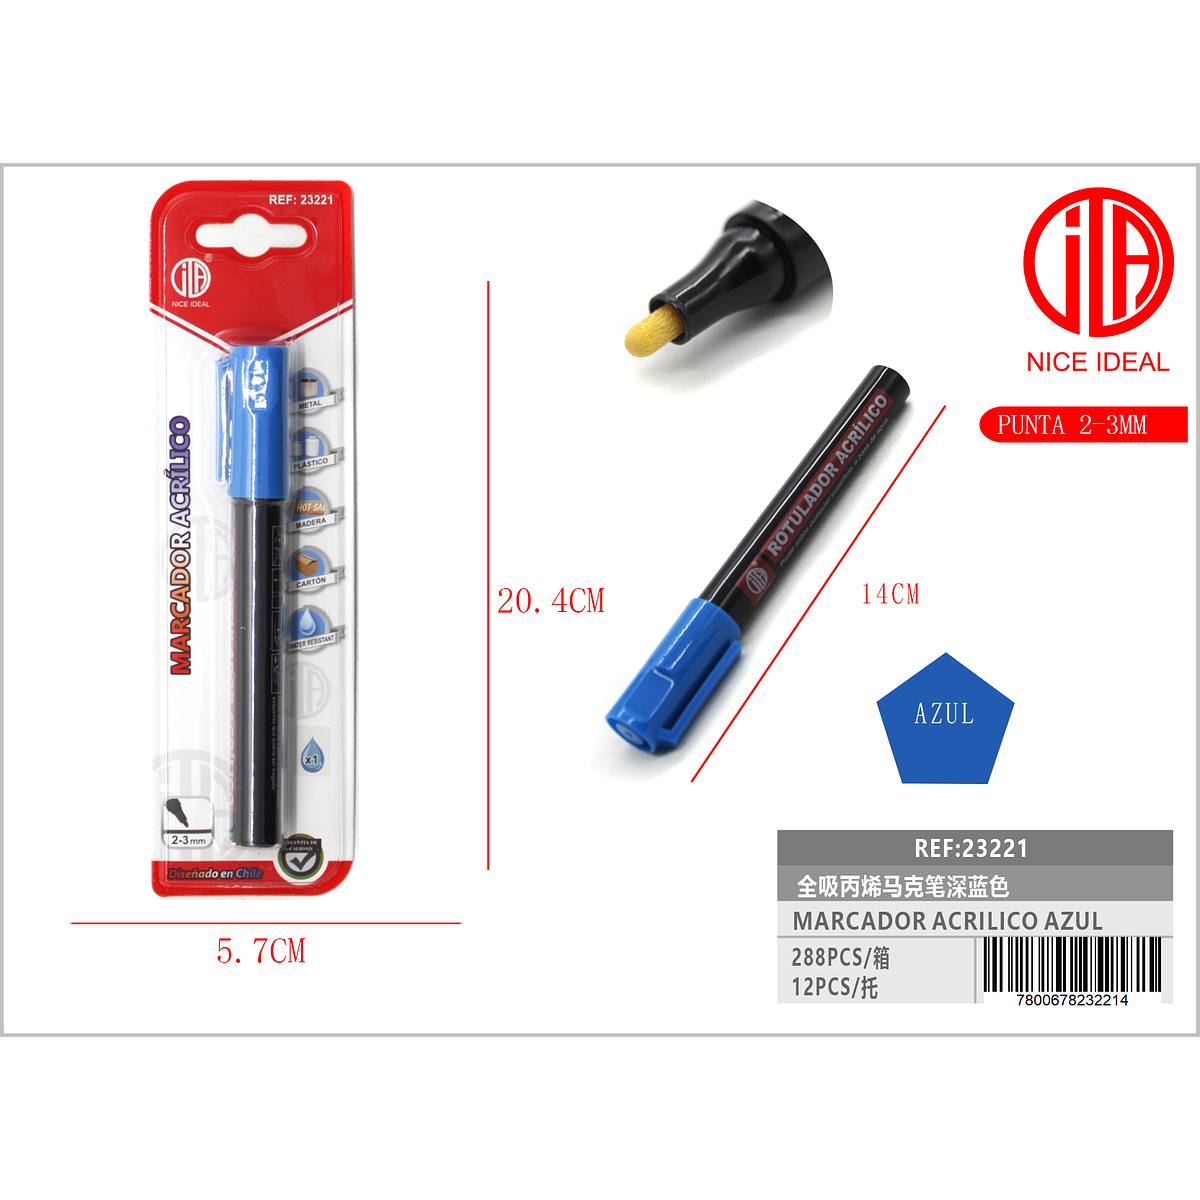 Marcadores Acrílicos para Múltiples Superficies 2-3mm (Azul)